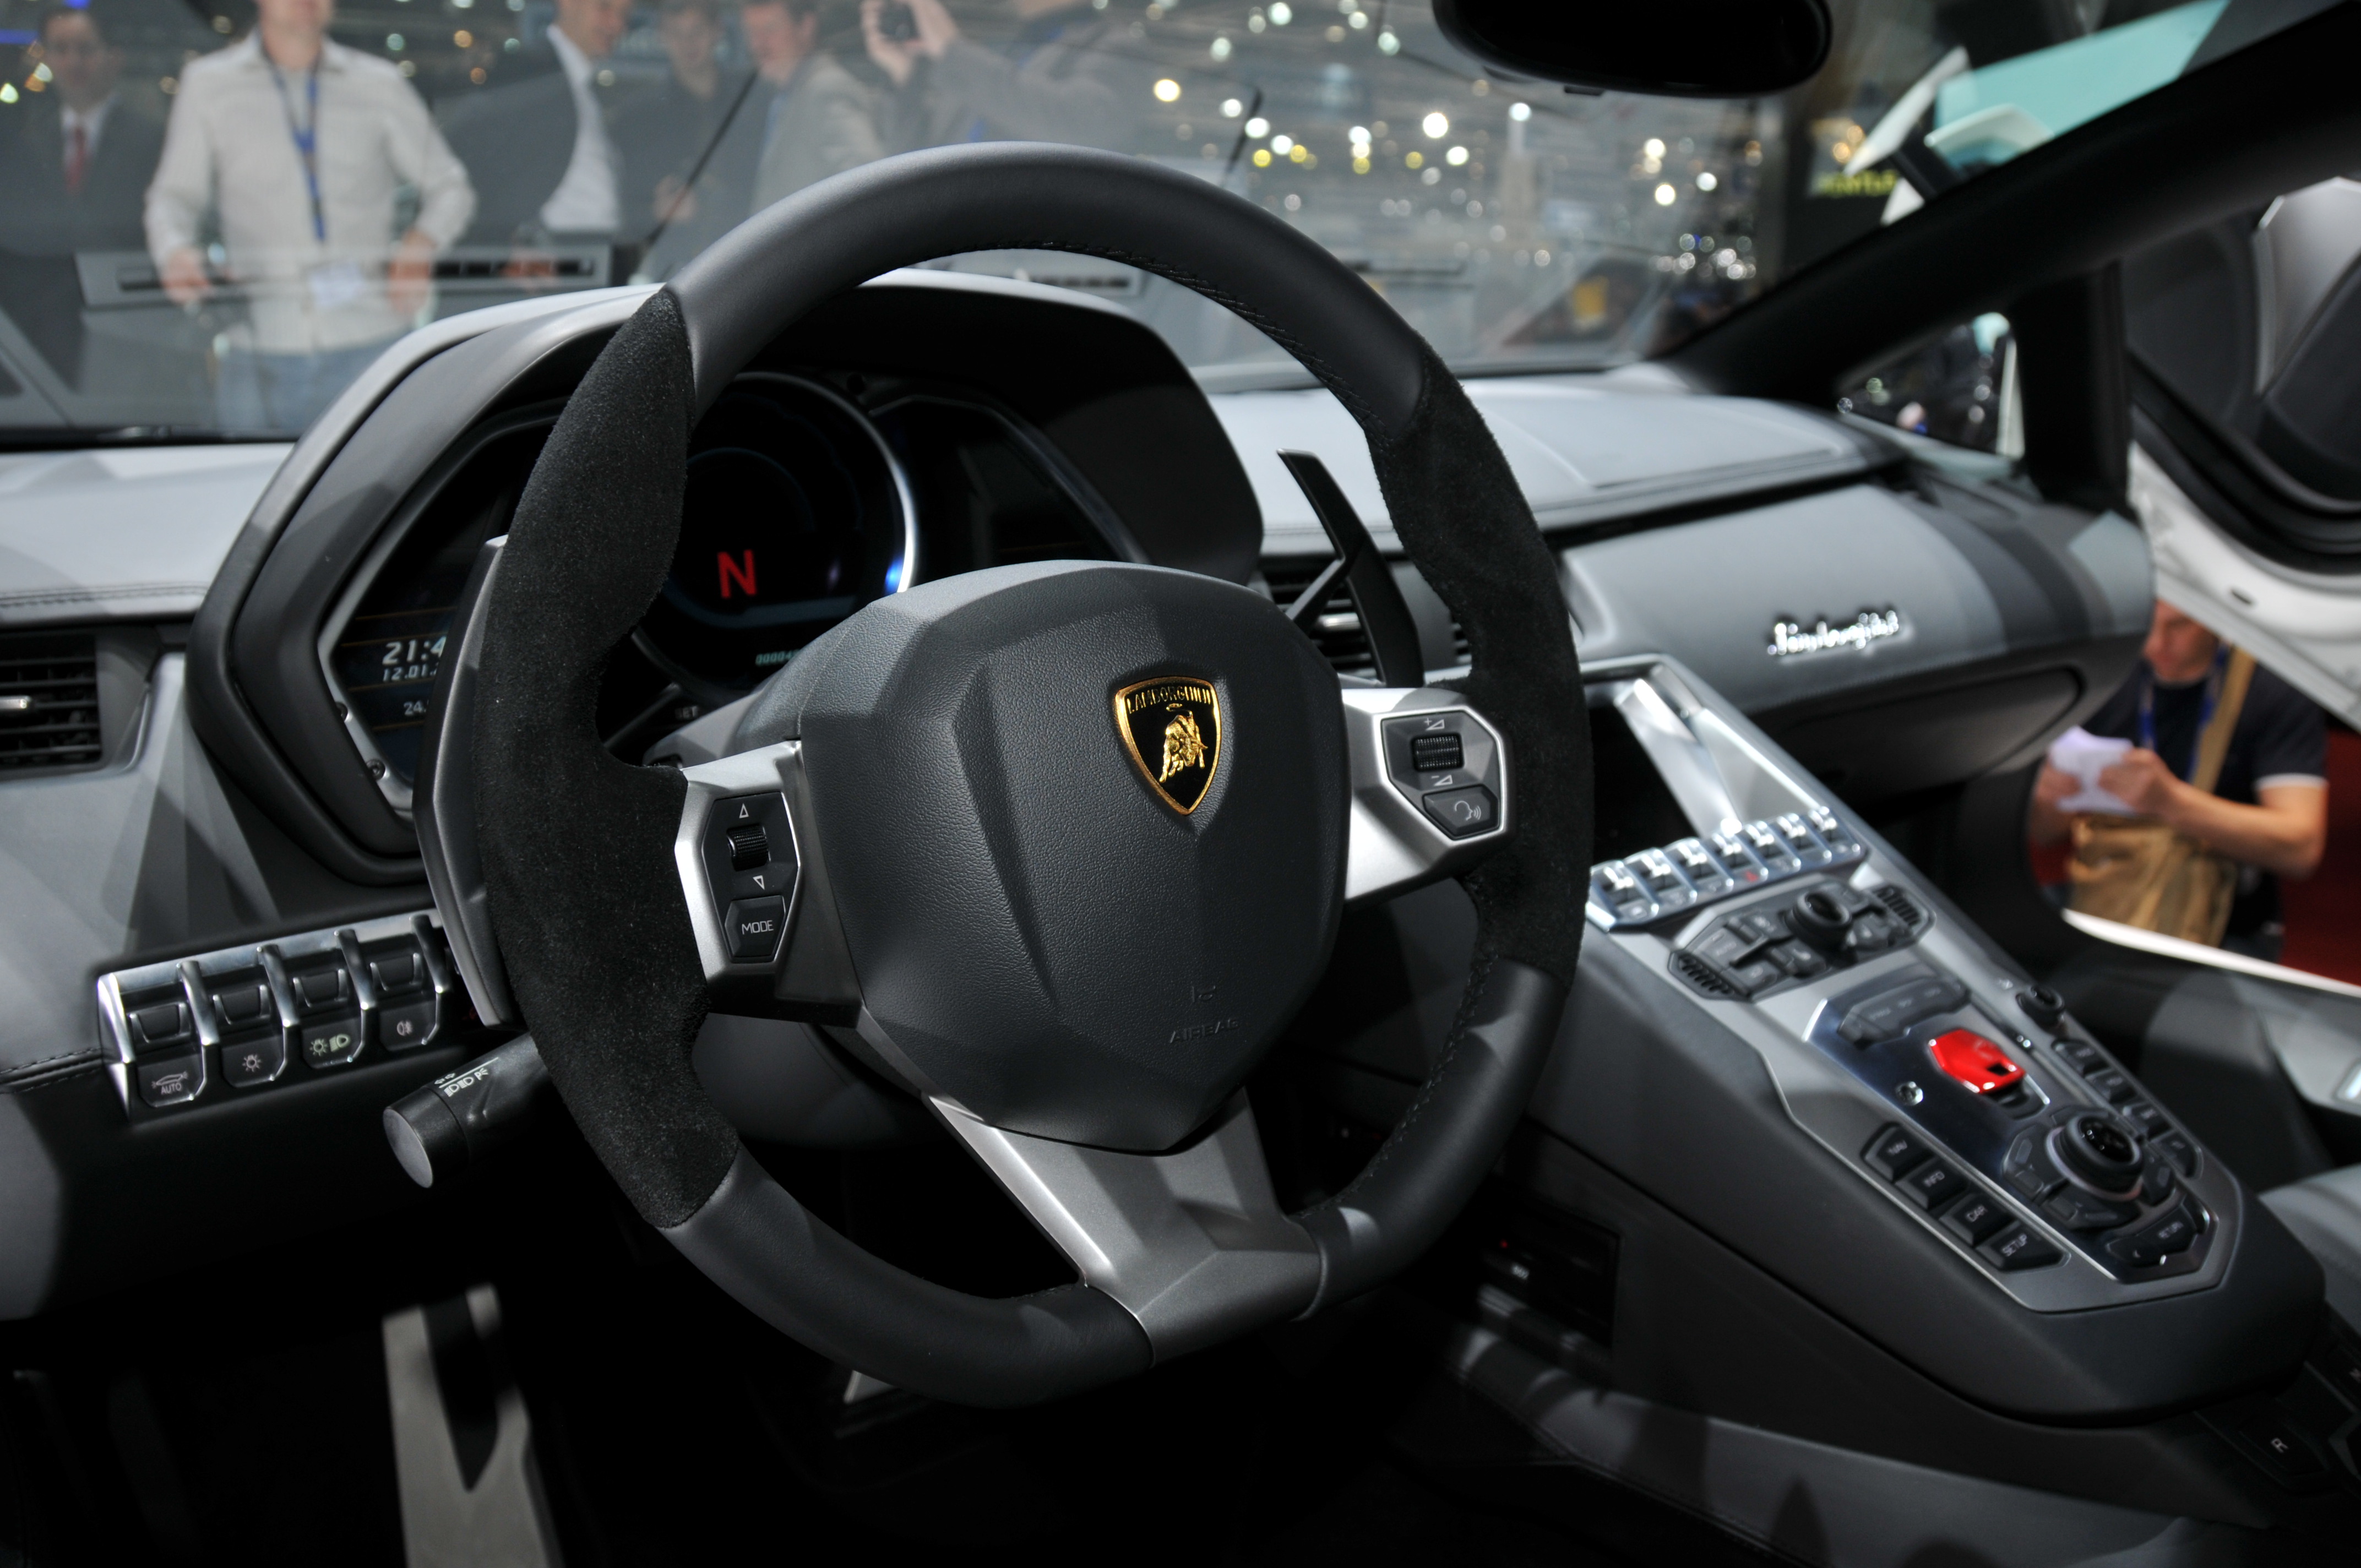 File:Lamborghini interior (5488709918).jpg - Wikimedia Commons